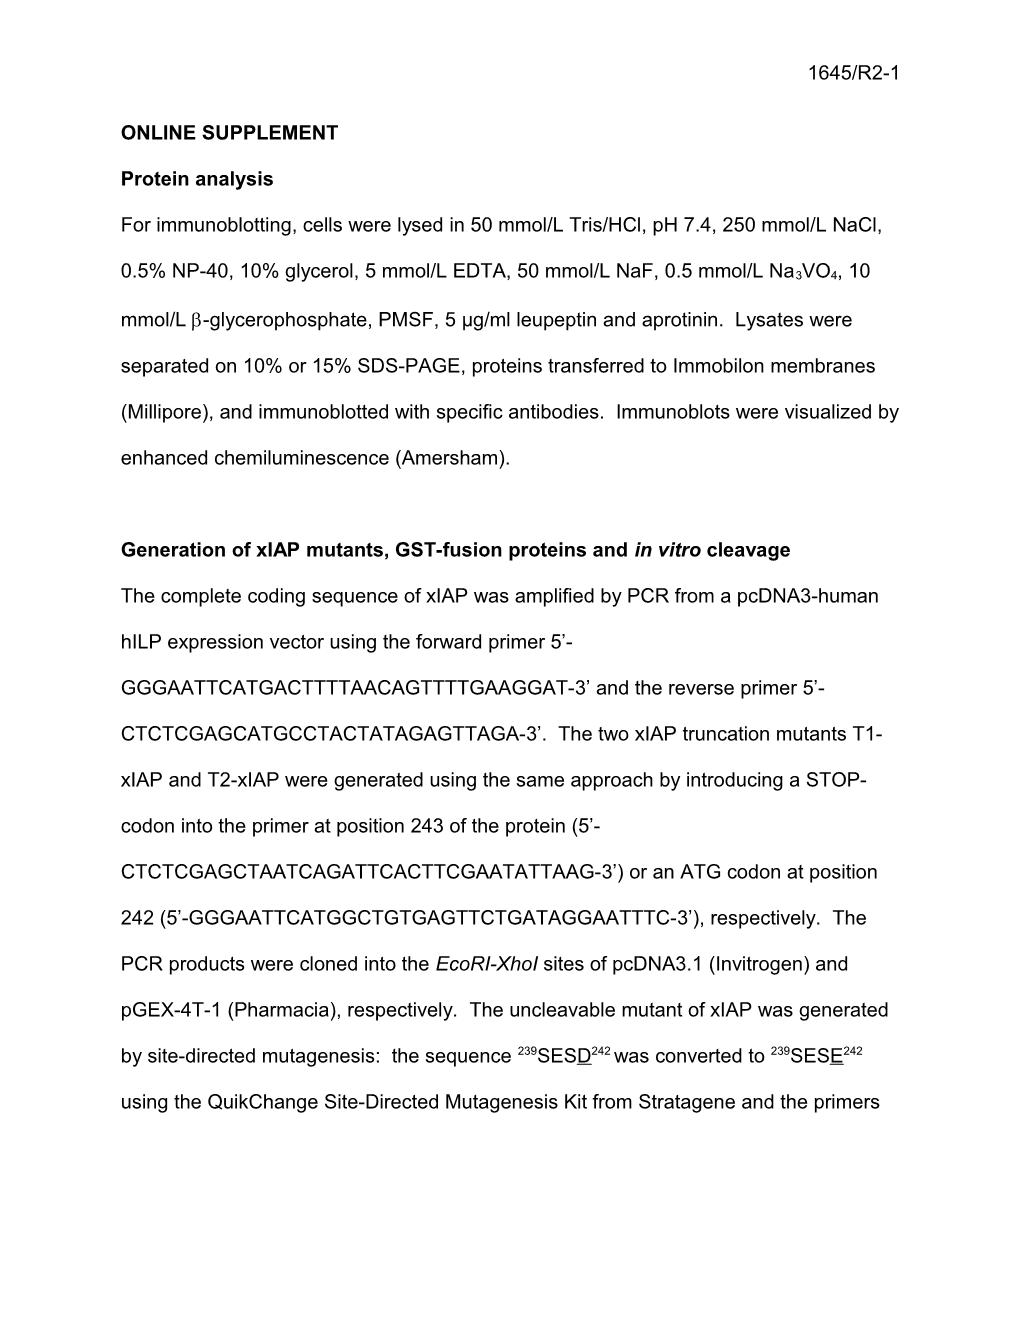 Protein Analysis and Fluorogenic Caspase Assays